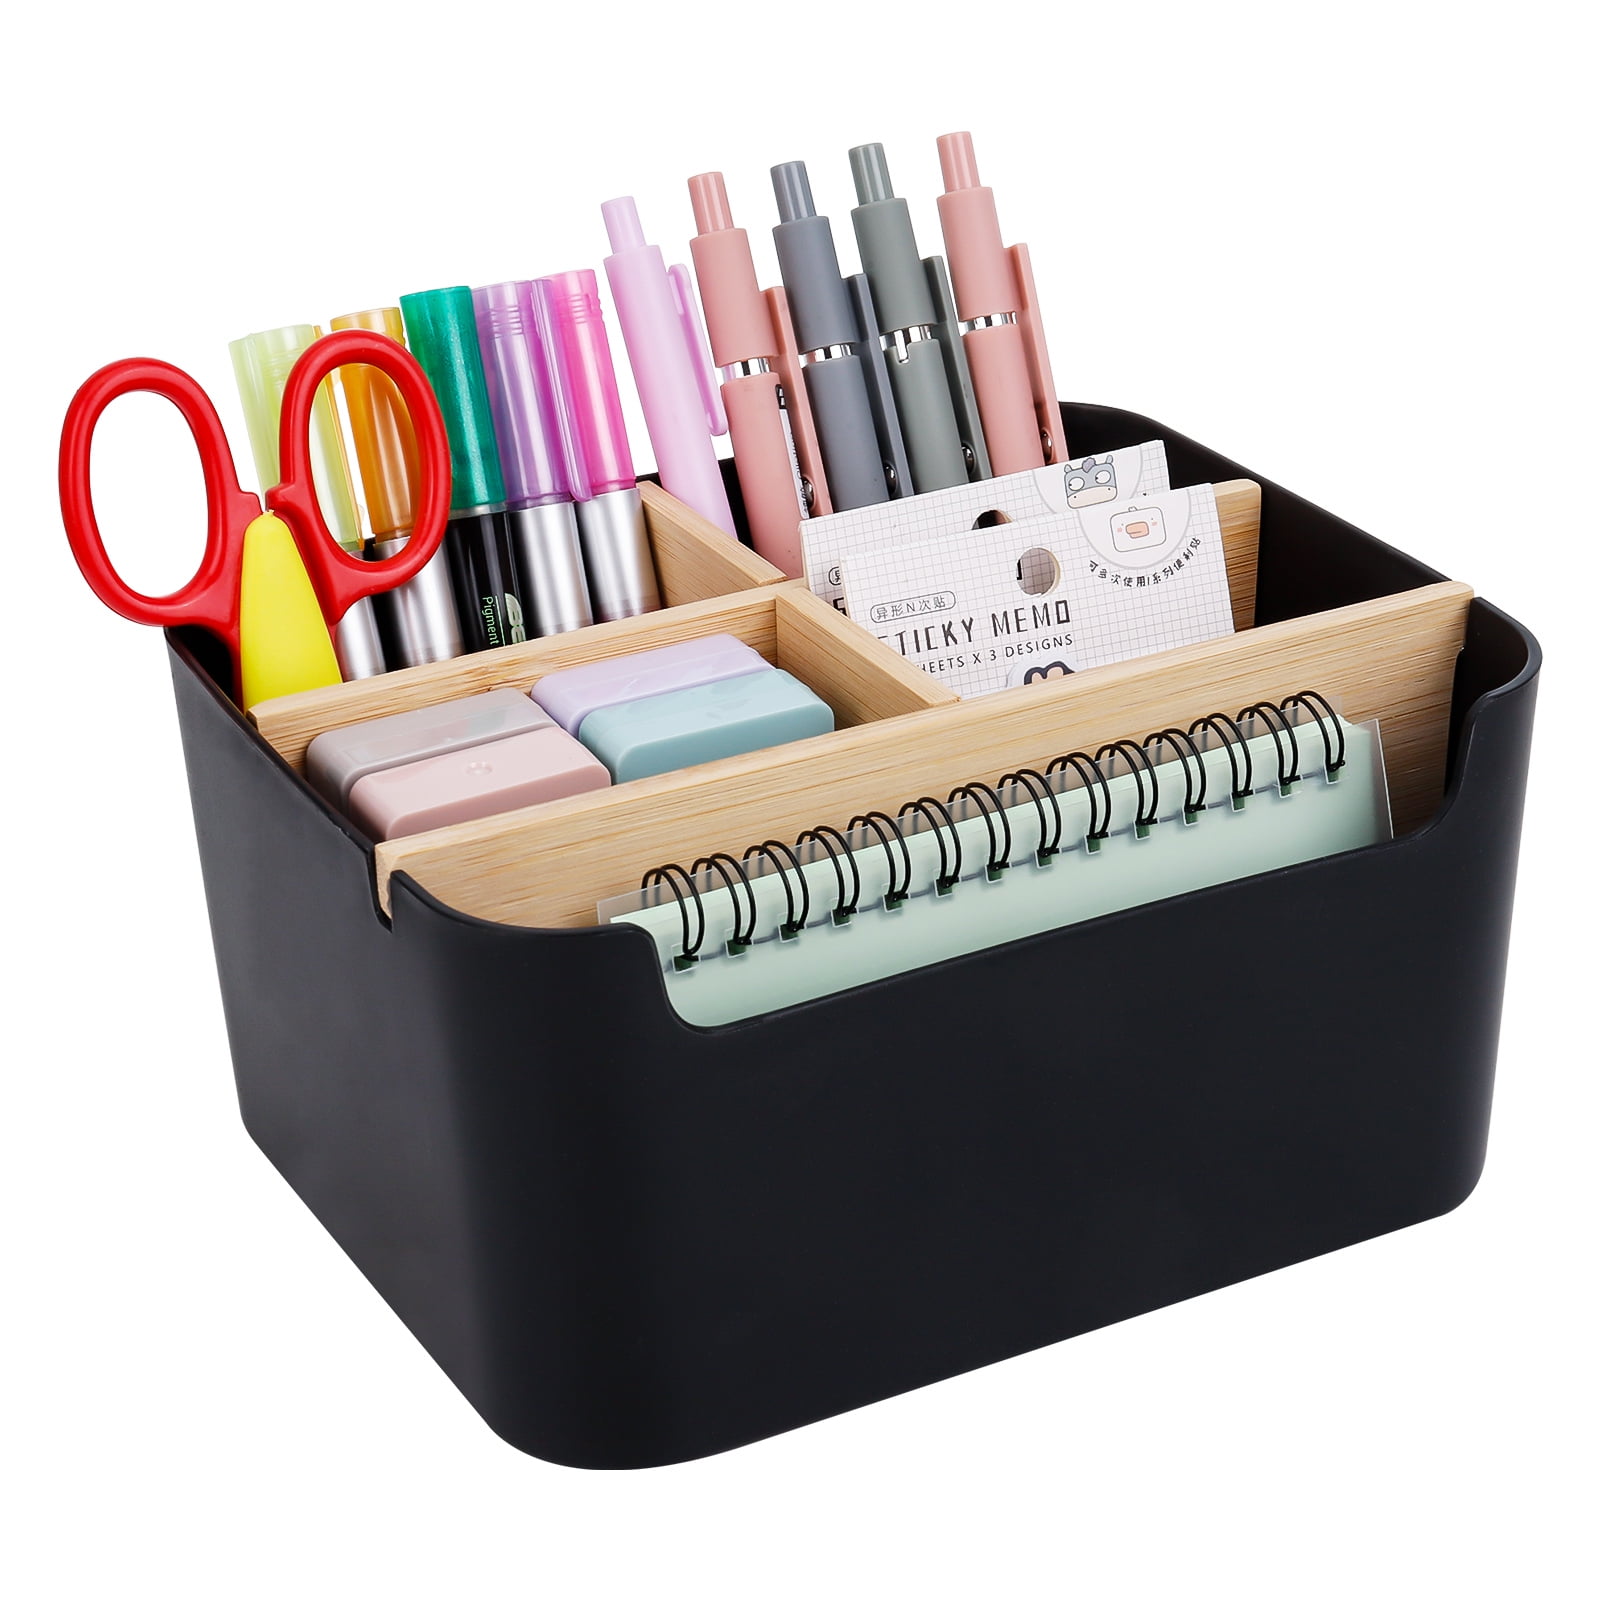 uywapvt Desk Organizer with Drawer, Pen Holder Storage Box, Desk Storage Box with Compartments, Acrylic Desk Organizer Caddy, Desk Dr